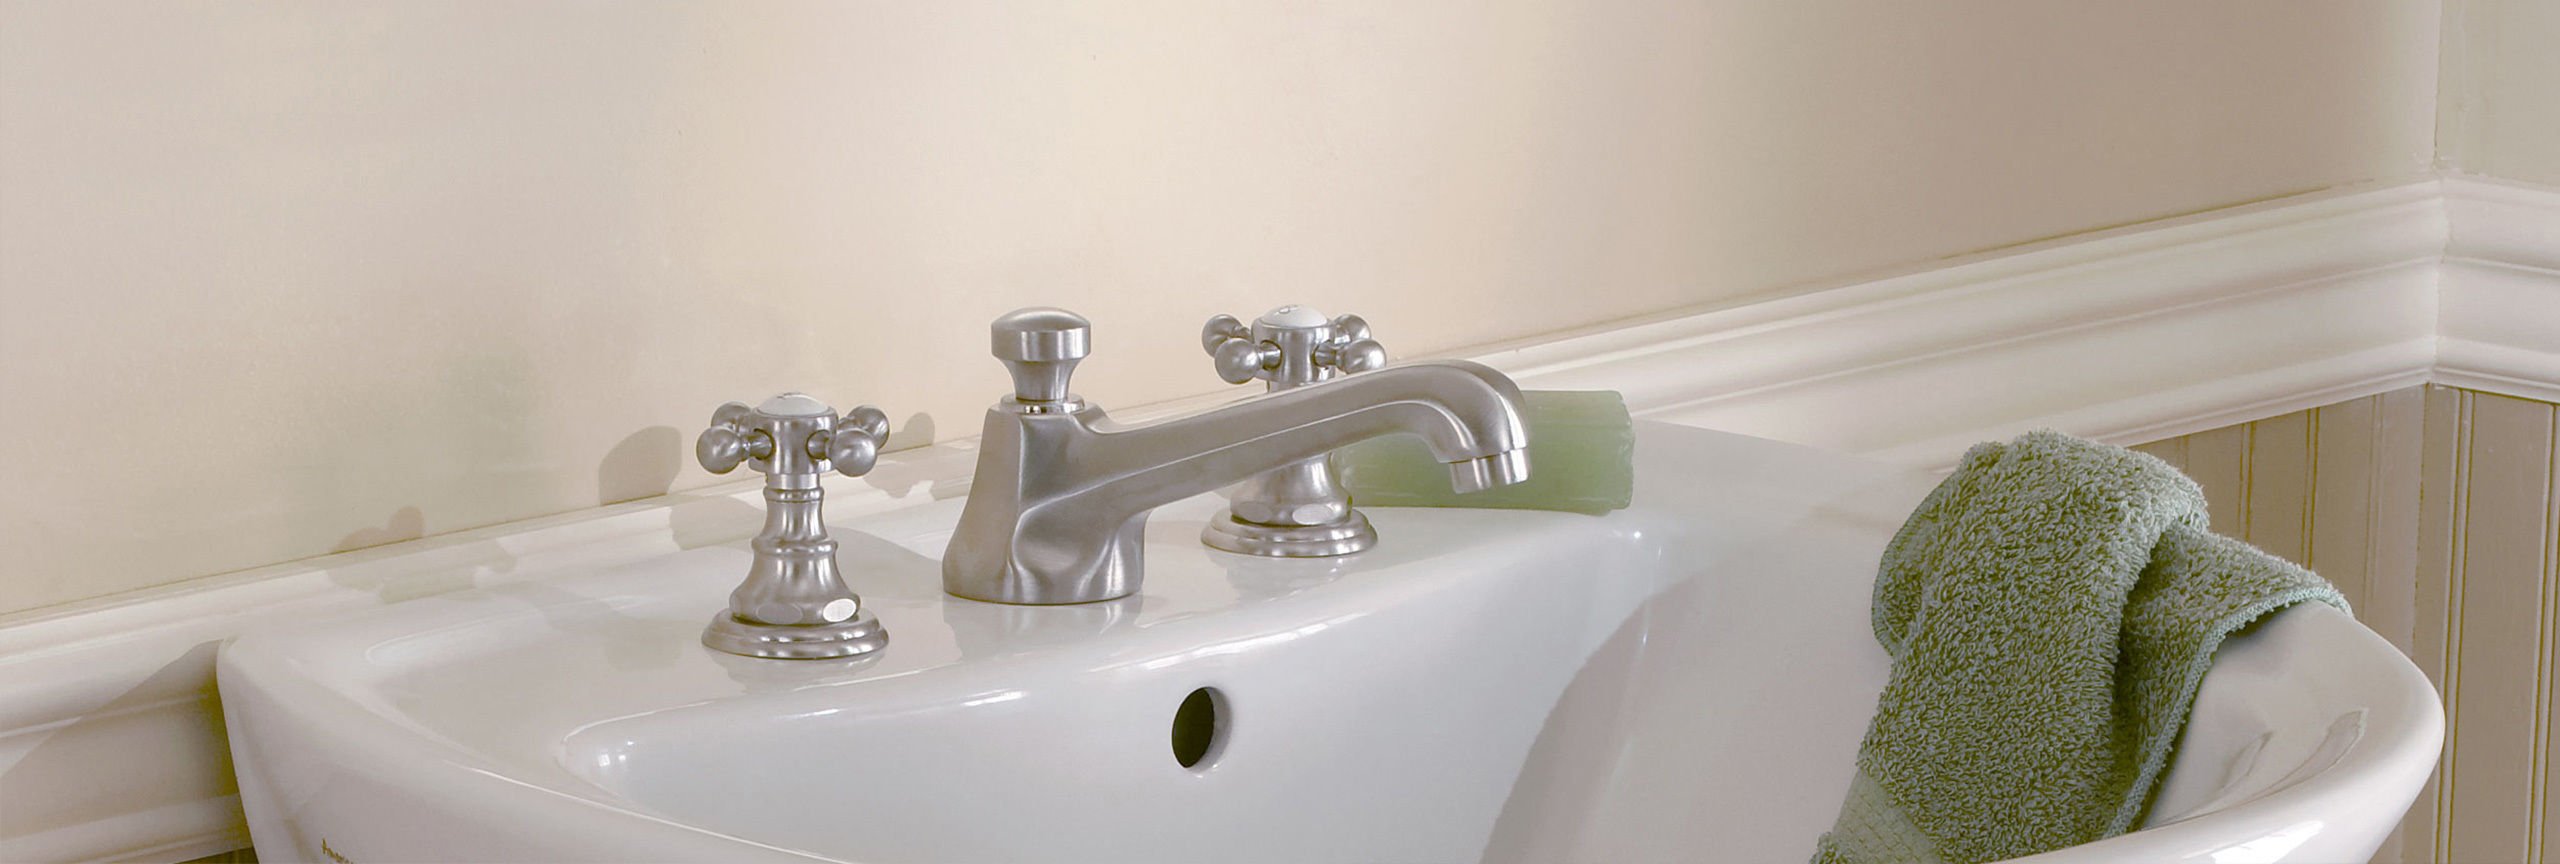 bathroom series Del Mar widespread faucet on vanity sink